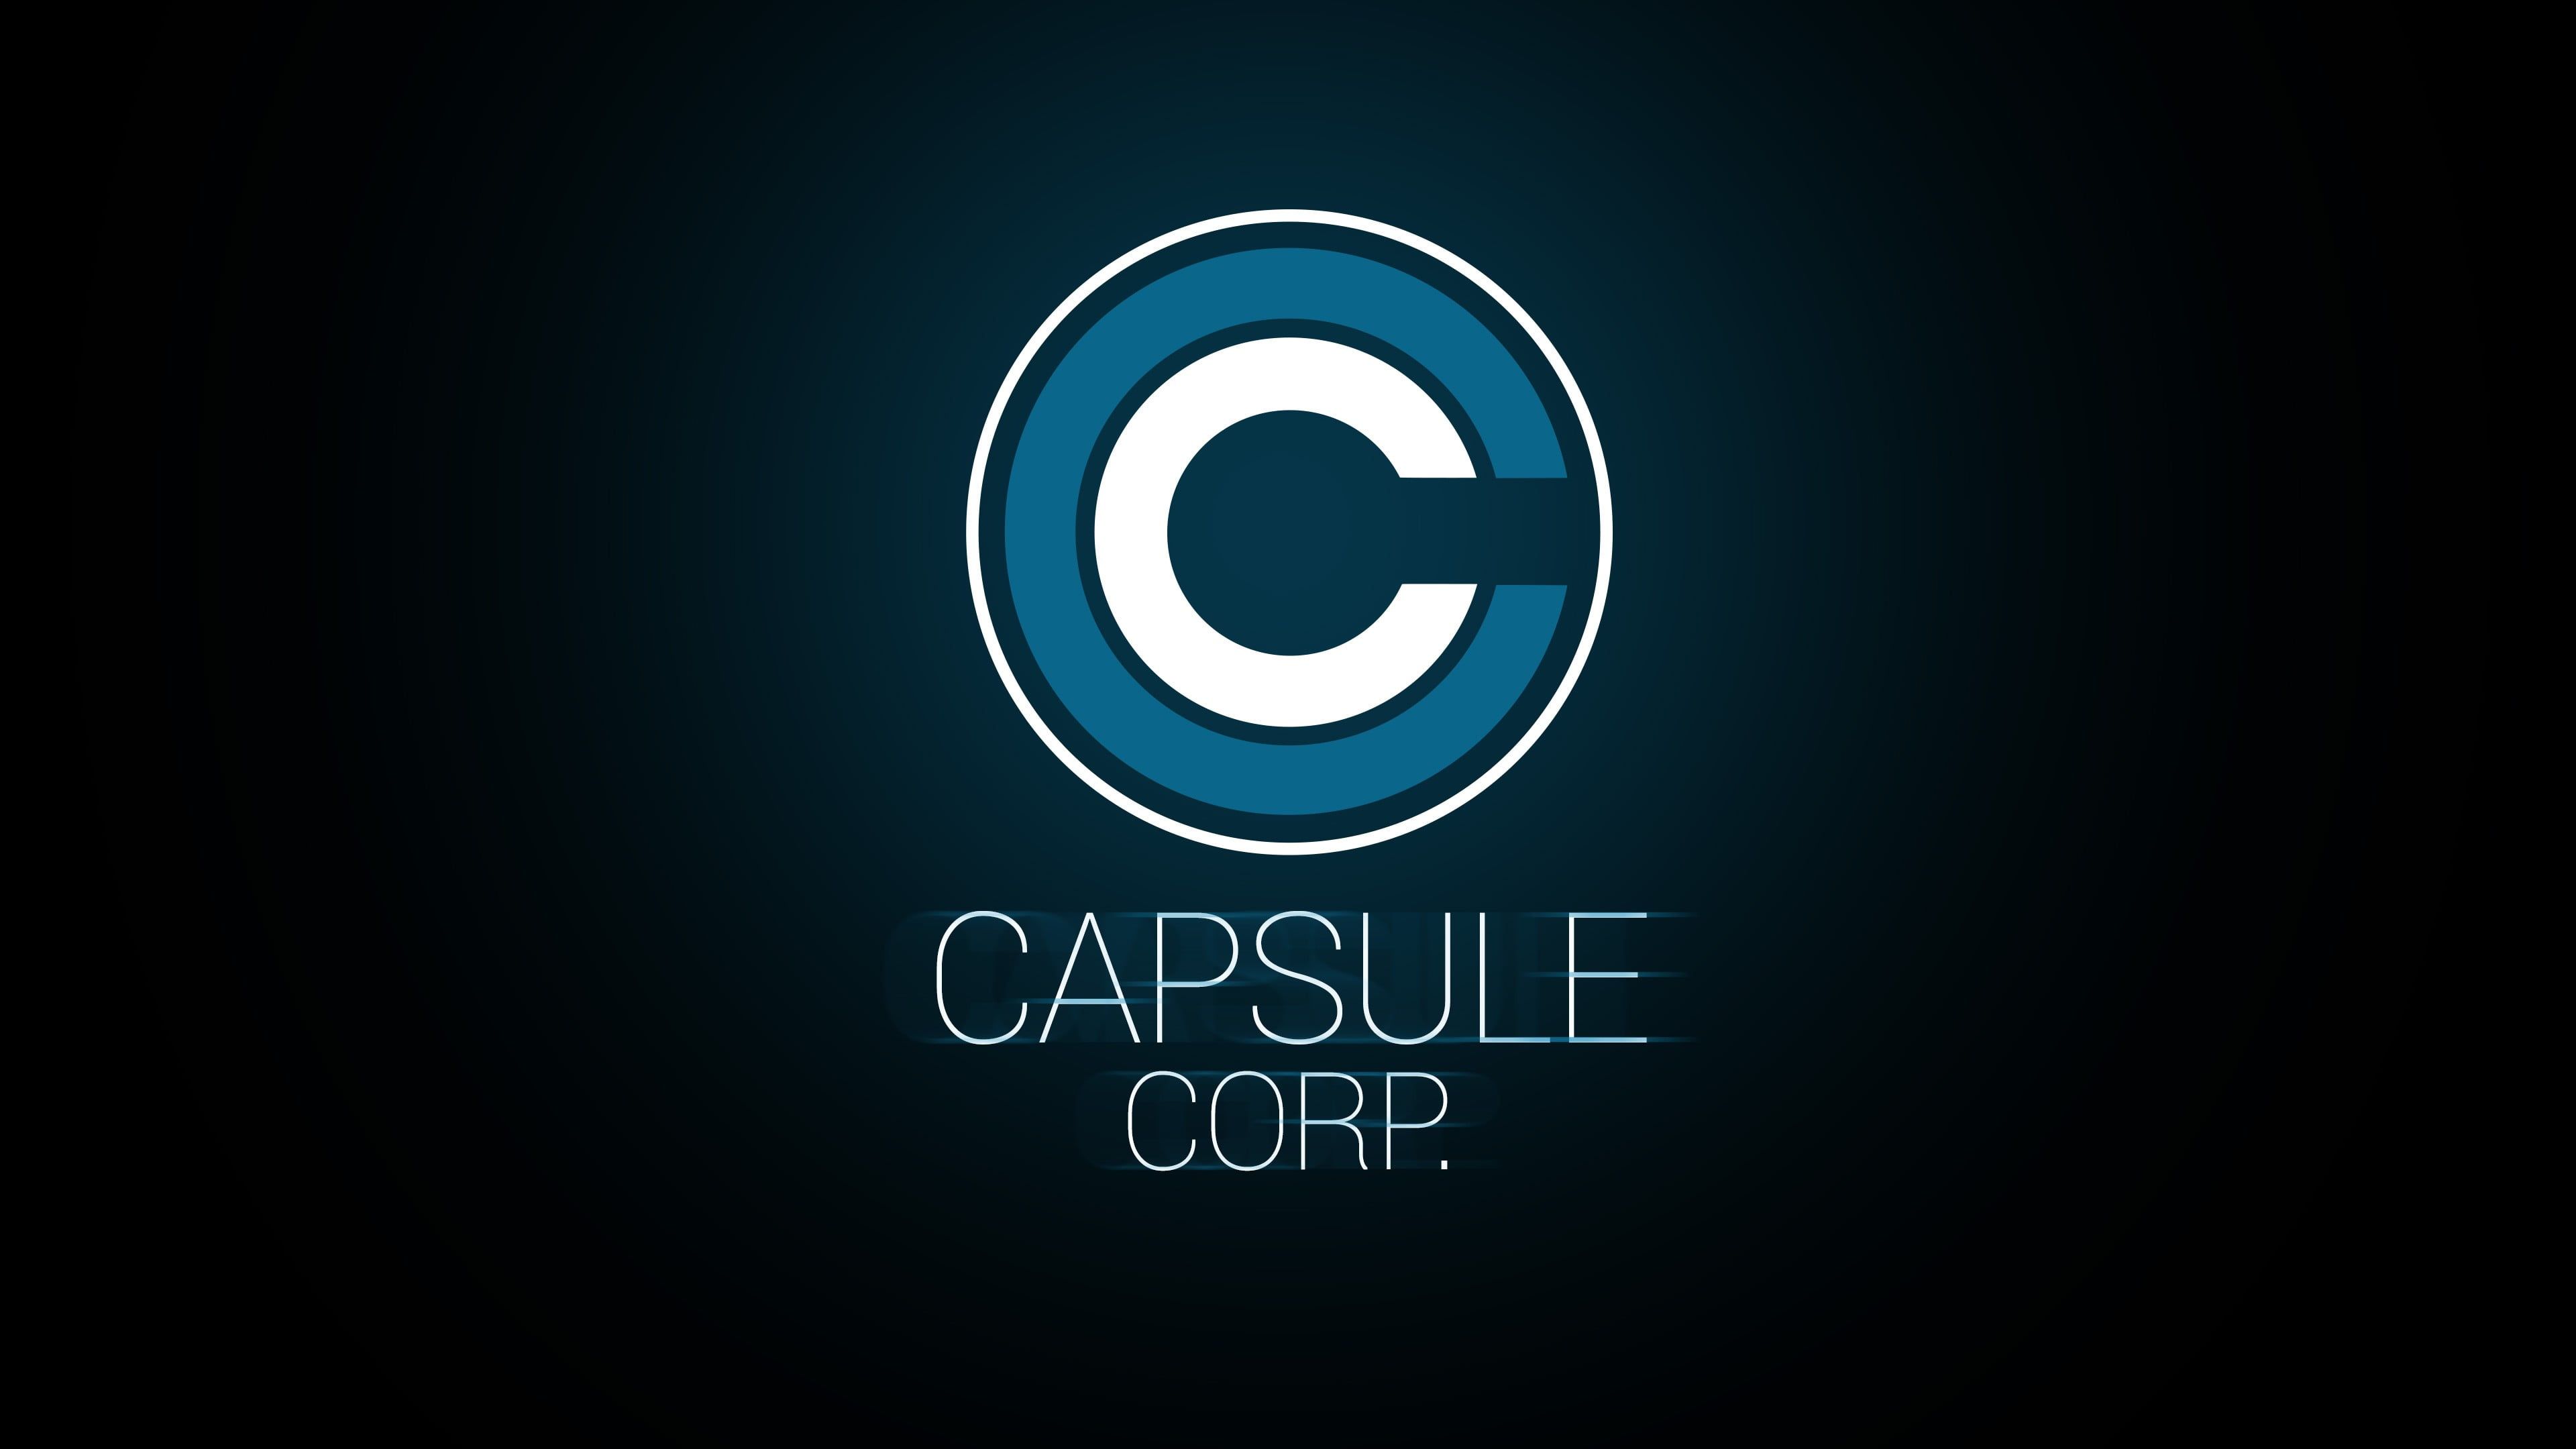 Capsule Corp logo Dragon Ball Z Capsule .com